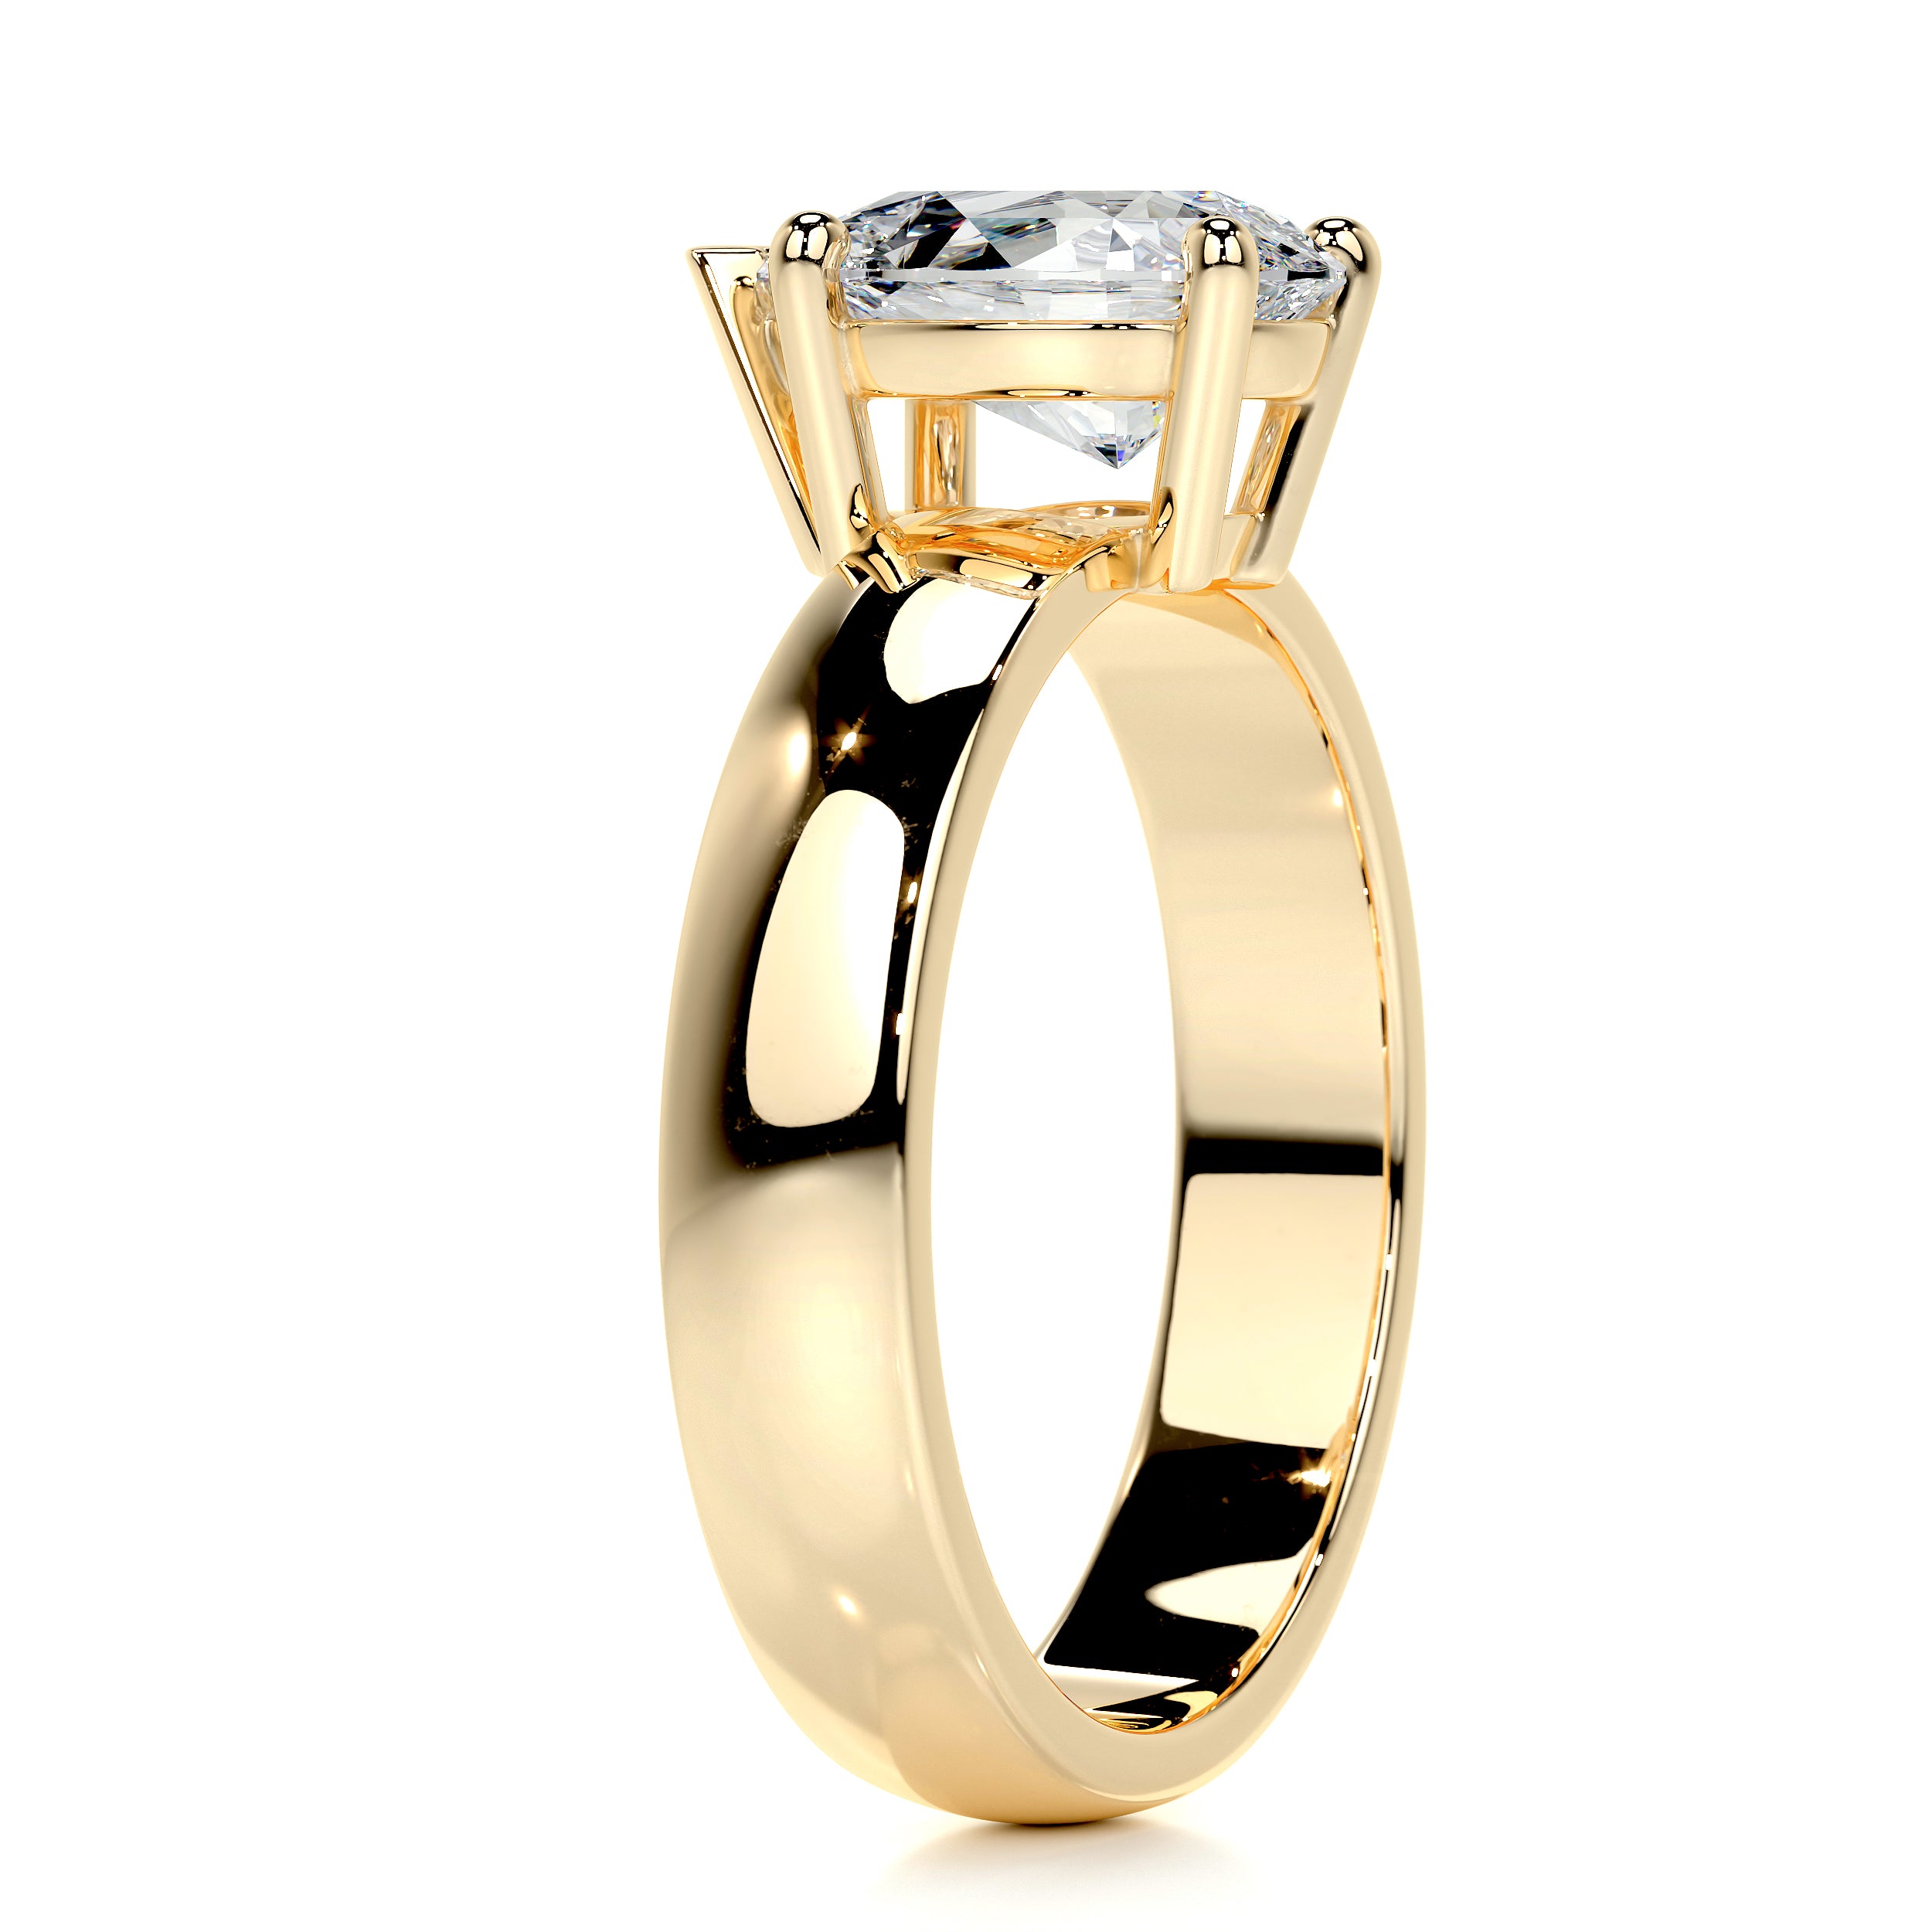 Hannah Diamond Engagement Ring   (1.5 Carat) -18K Yellow Gold